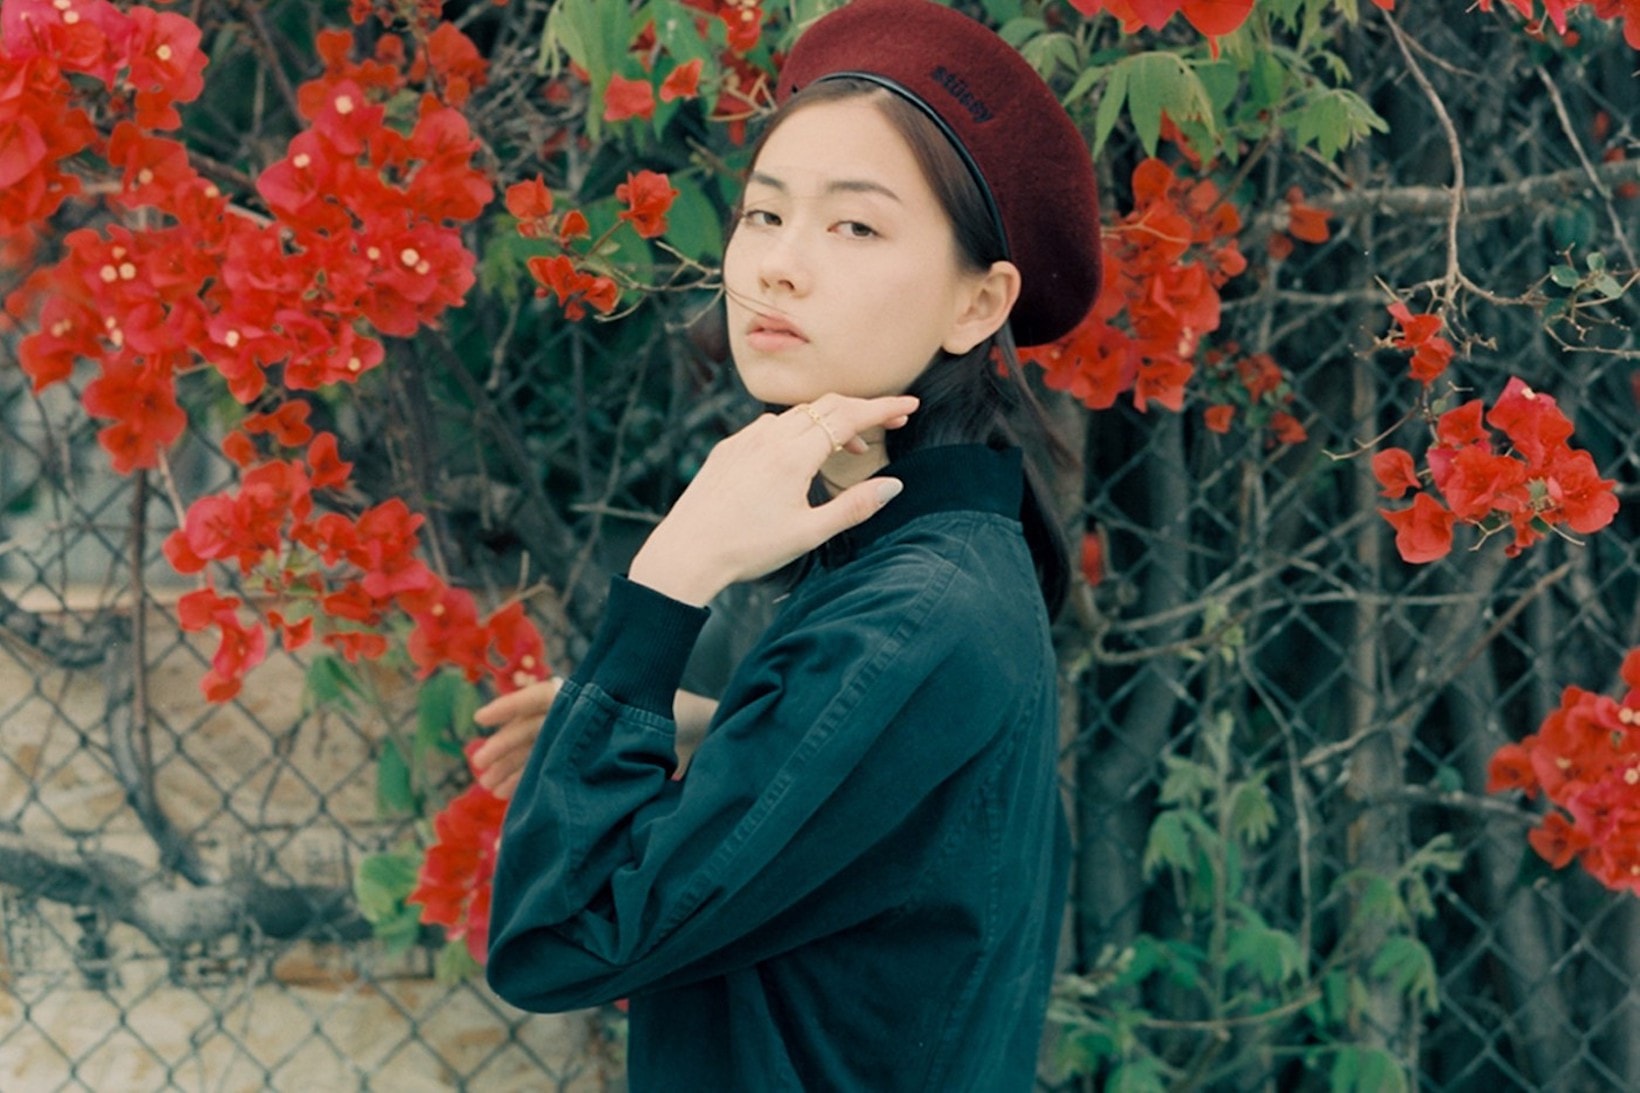 lauren tsai actress stussy hat fashion flowers moxie cast amy poehler movie film netflix